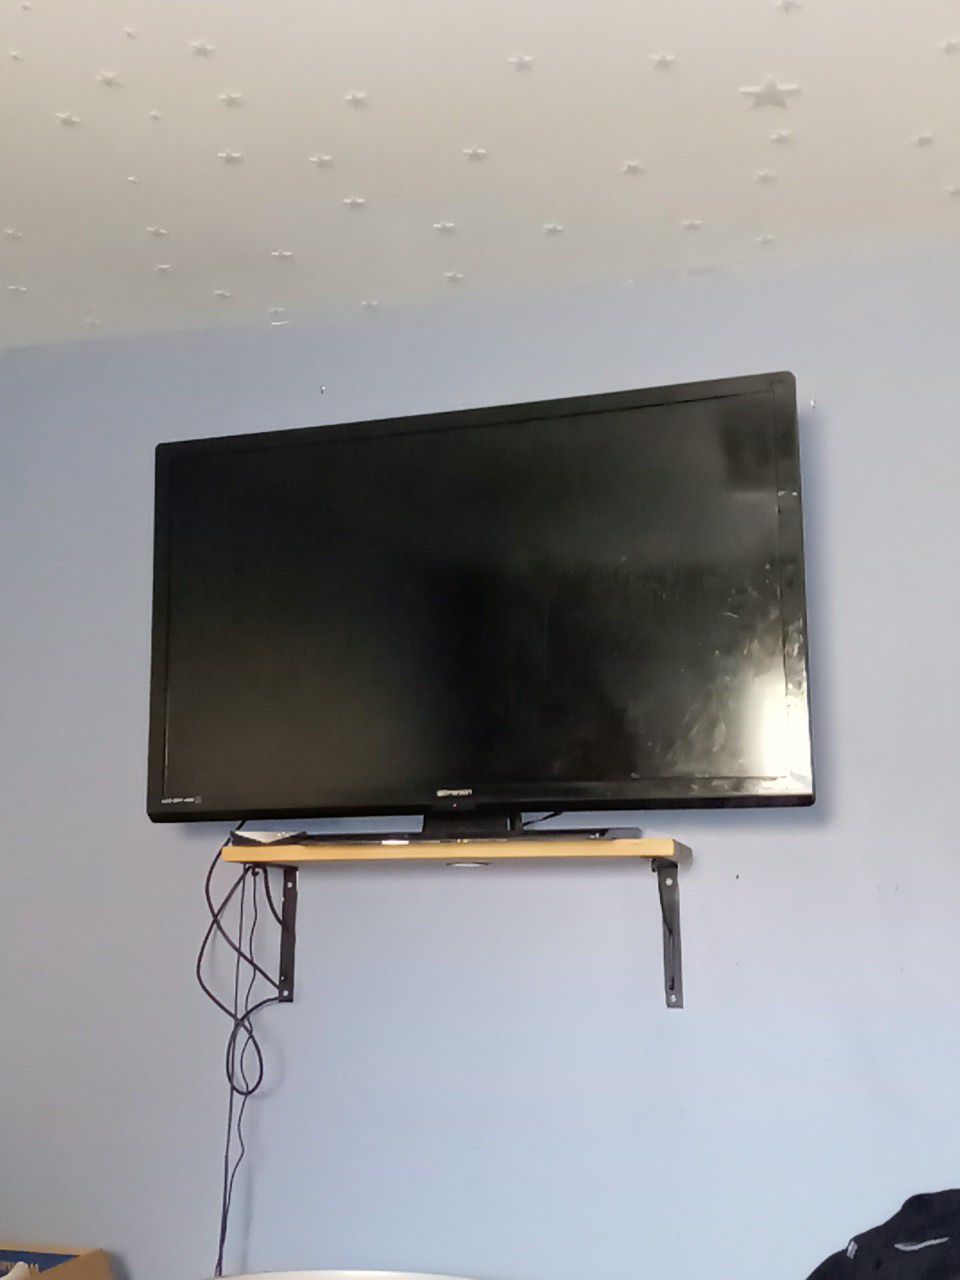 Emerson 55 inch flat screen TV